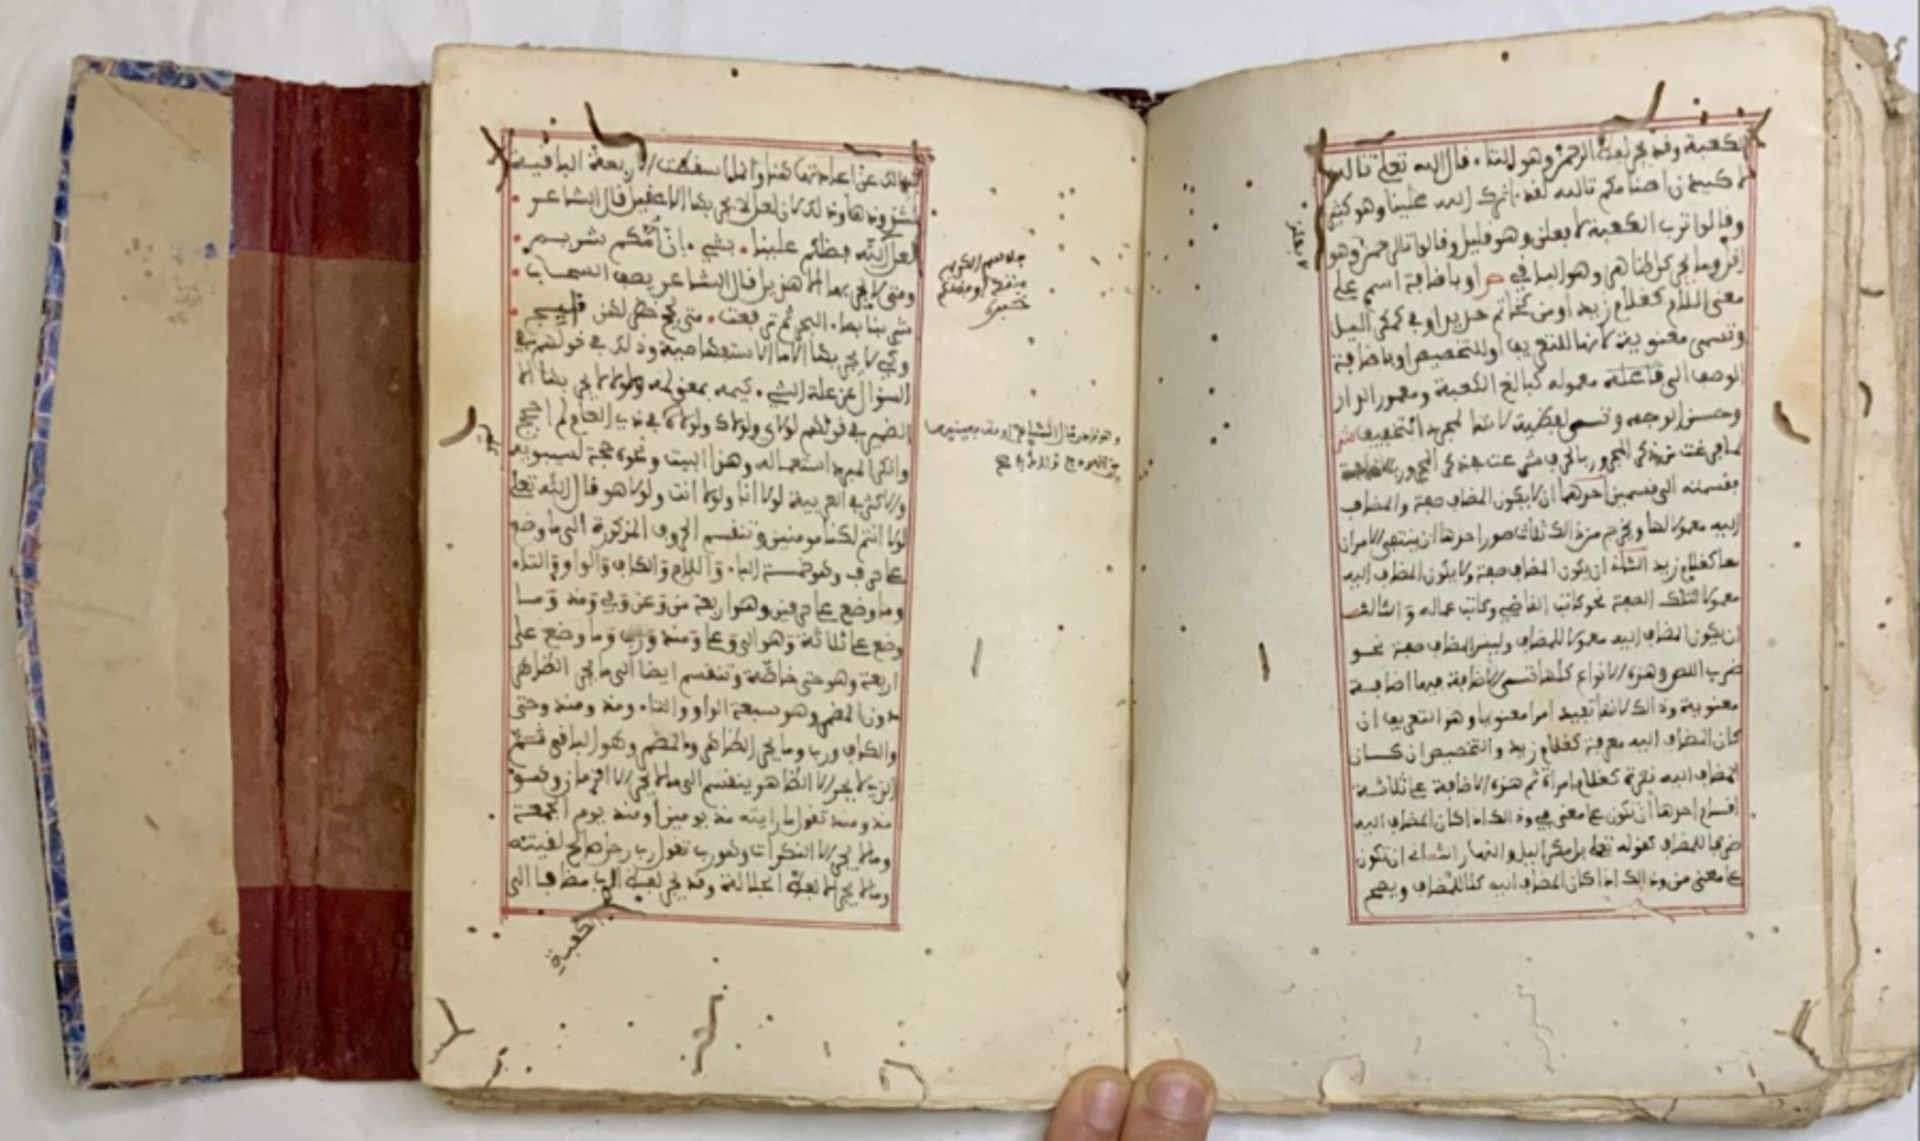 18th century Islamic manuscript on morphology and rhetoric - Image 9 of 18